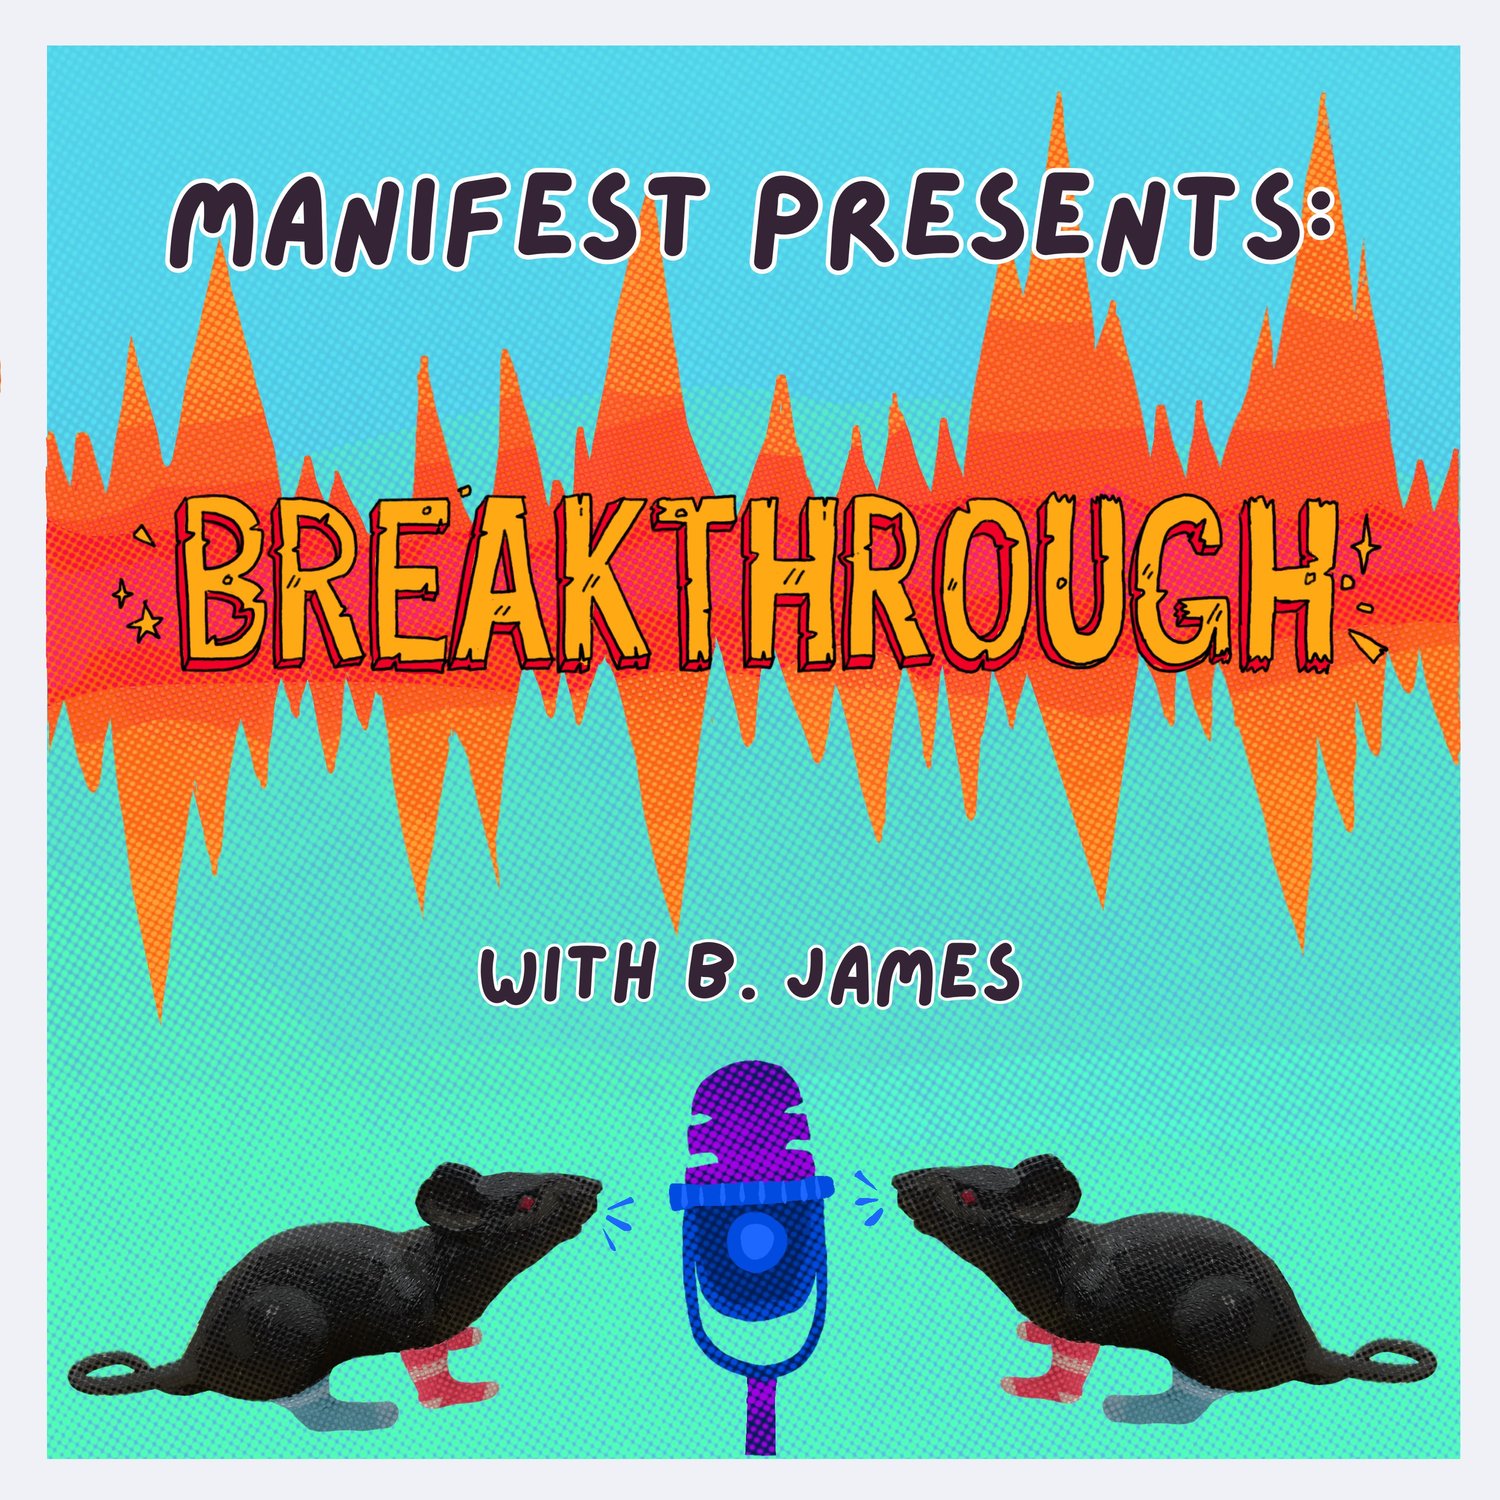 The Manifest Urban Arts Podcast